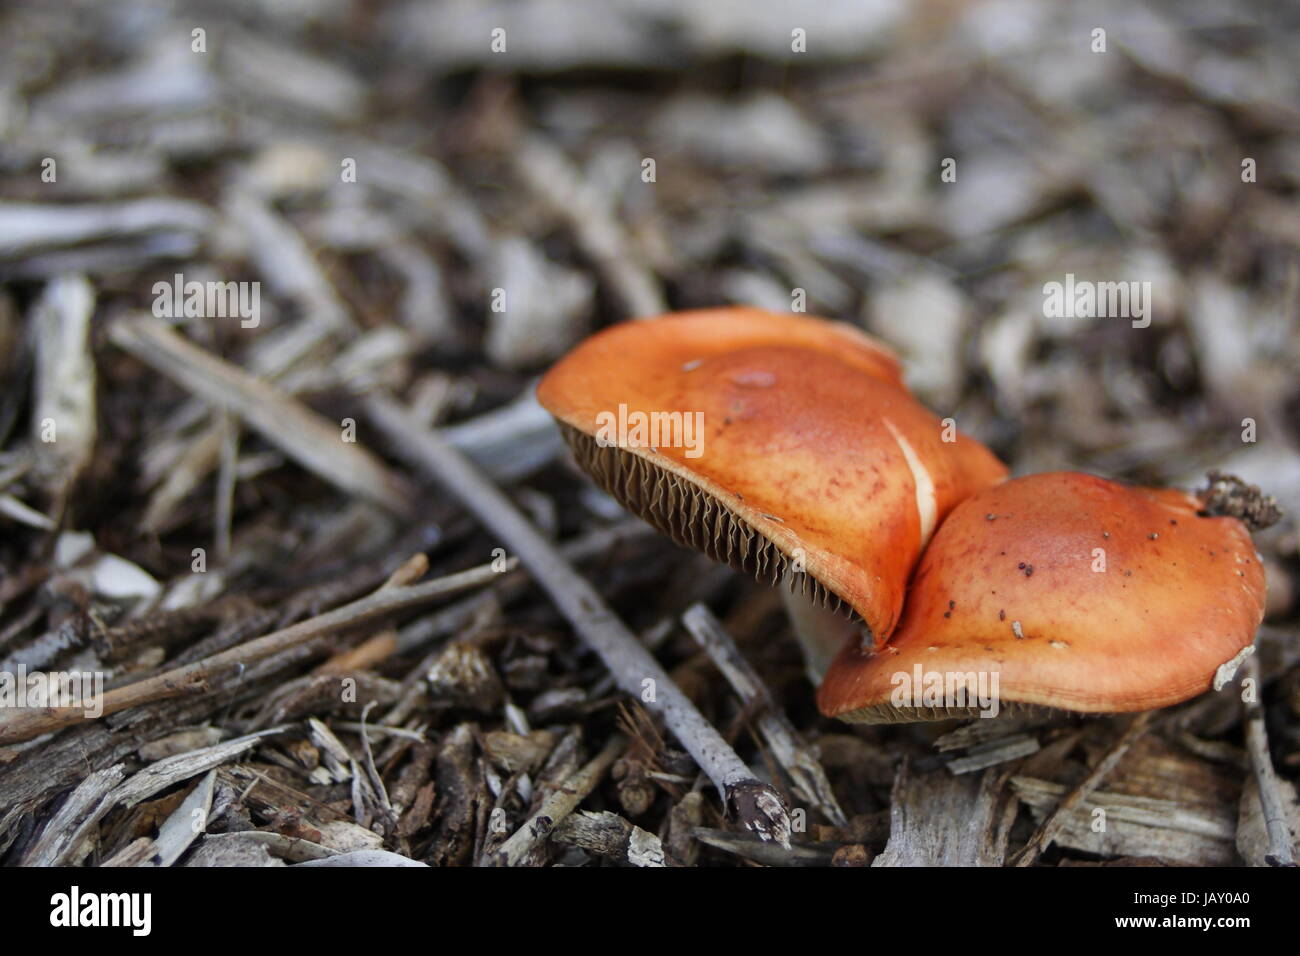 Mushroom Fungi Growing In Garden Mulch Stock Photo 144422488 Alamy